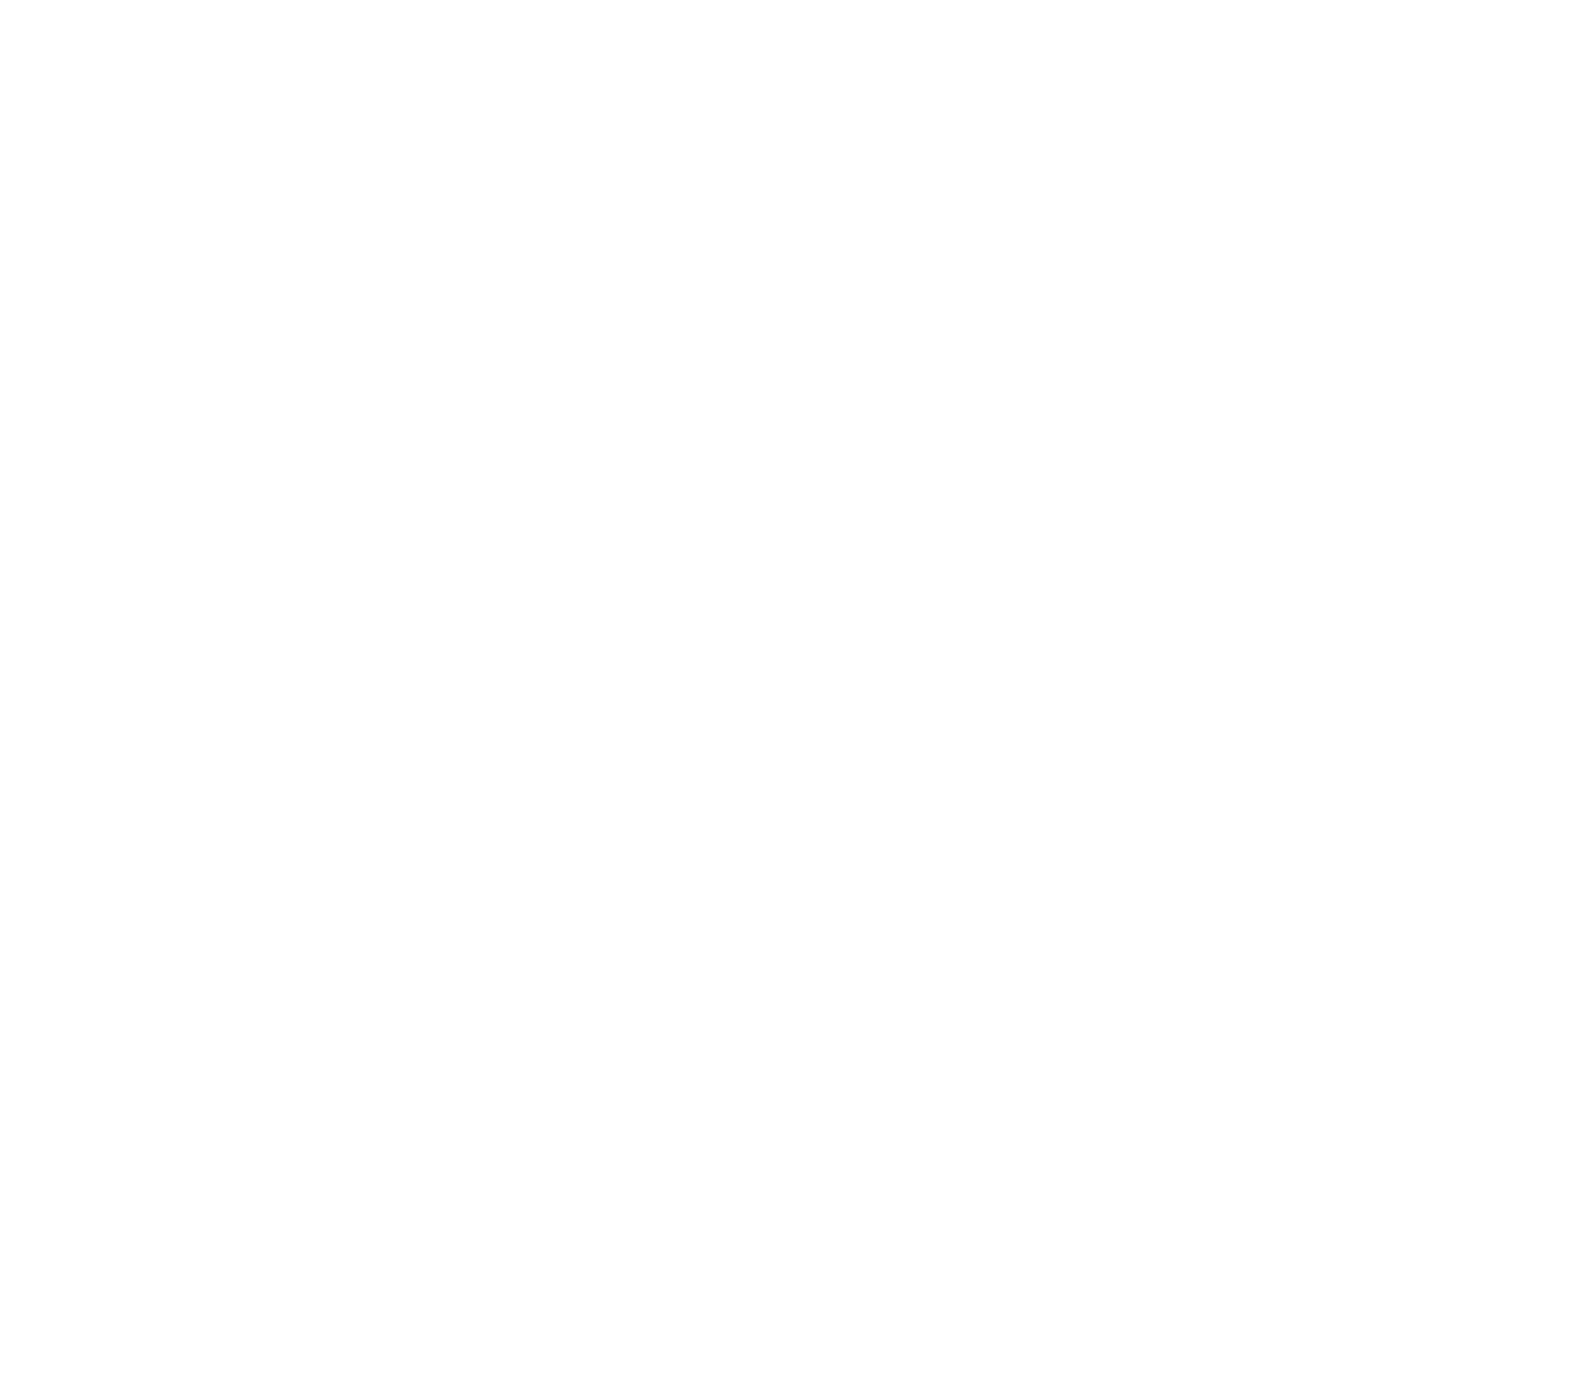 Ericsson logo large for dark backgrounds (transparent PNG)